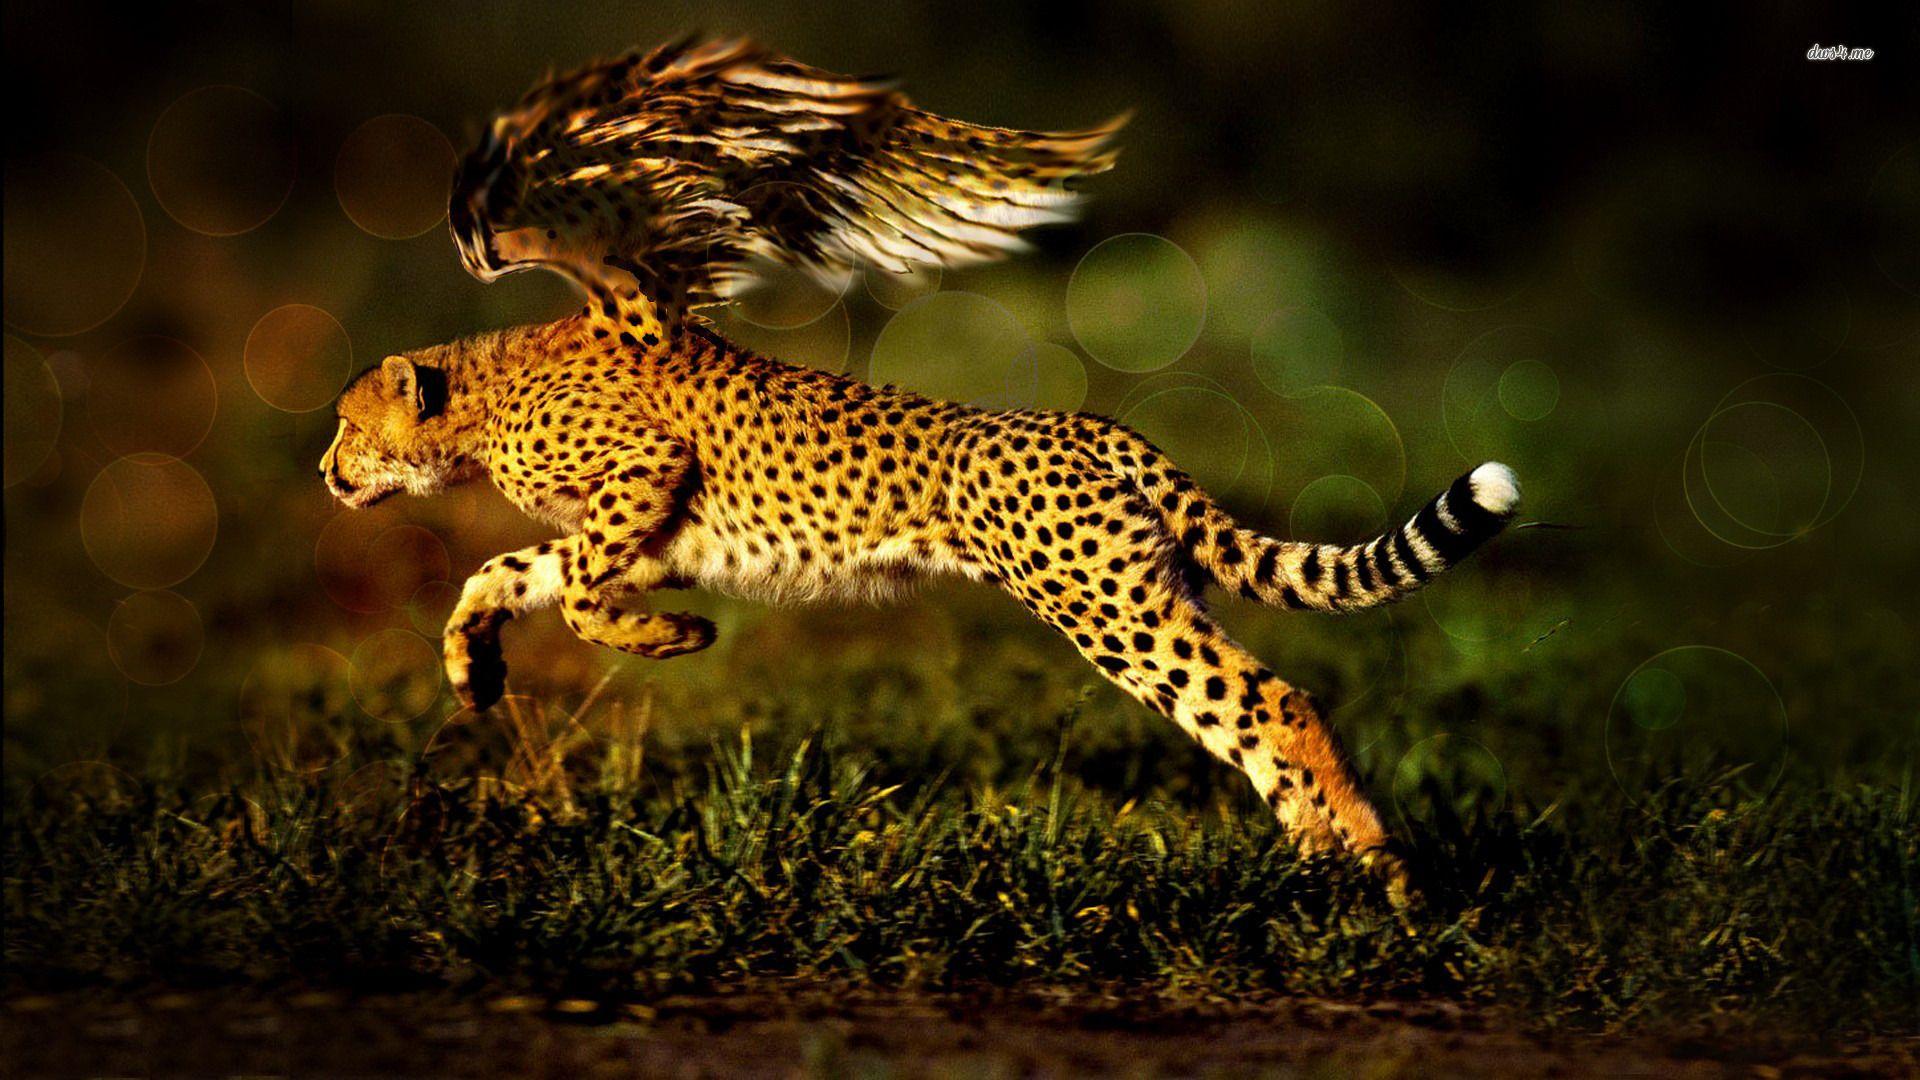 Cheetah Wallpaper Cheetah Modern FHDQ Image Screens Gallery